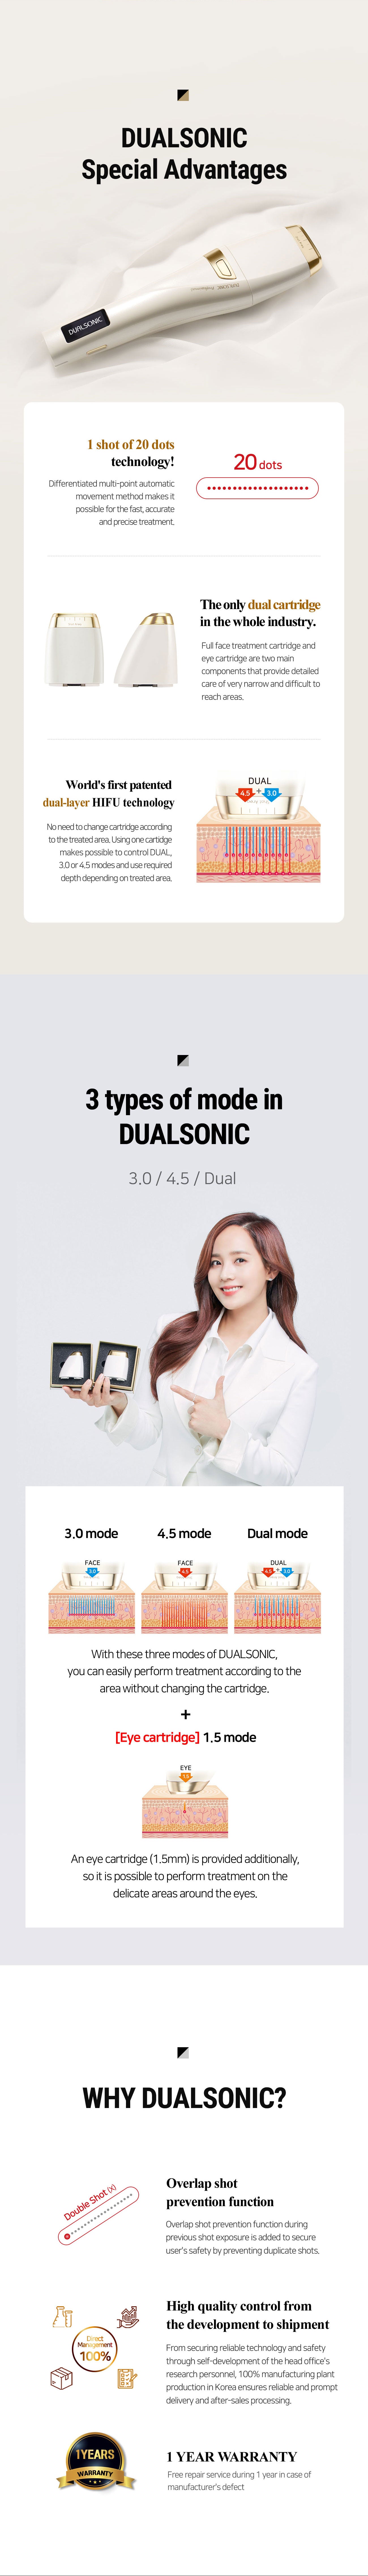 Dualsonic Special Advantages for HIFU treatment Malaysia | Dualsonic Professional | BeautyFoo Mall Malaysia